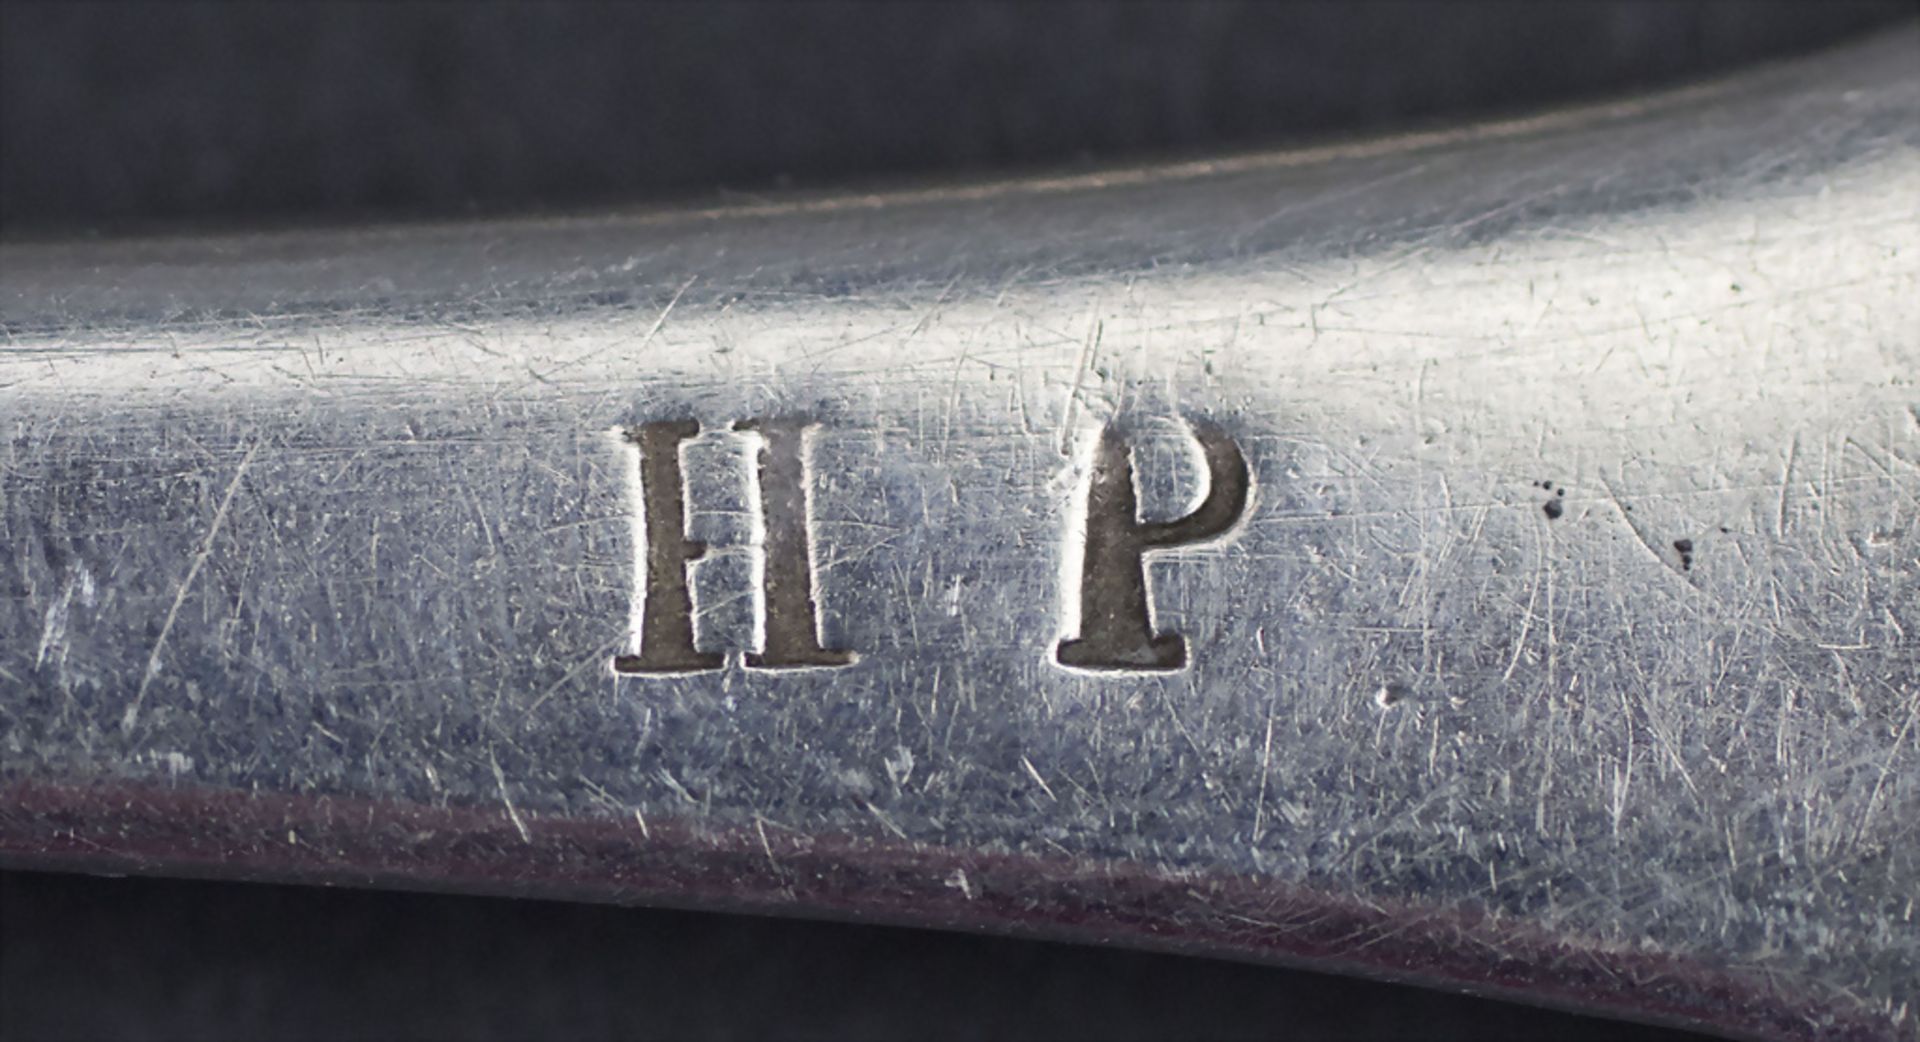 12-tlg. Silberbesteck / A 12-piece set of silver cutlery, Paris, nach 1839 - Image 7 of 7